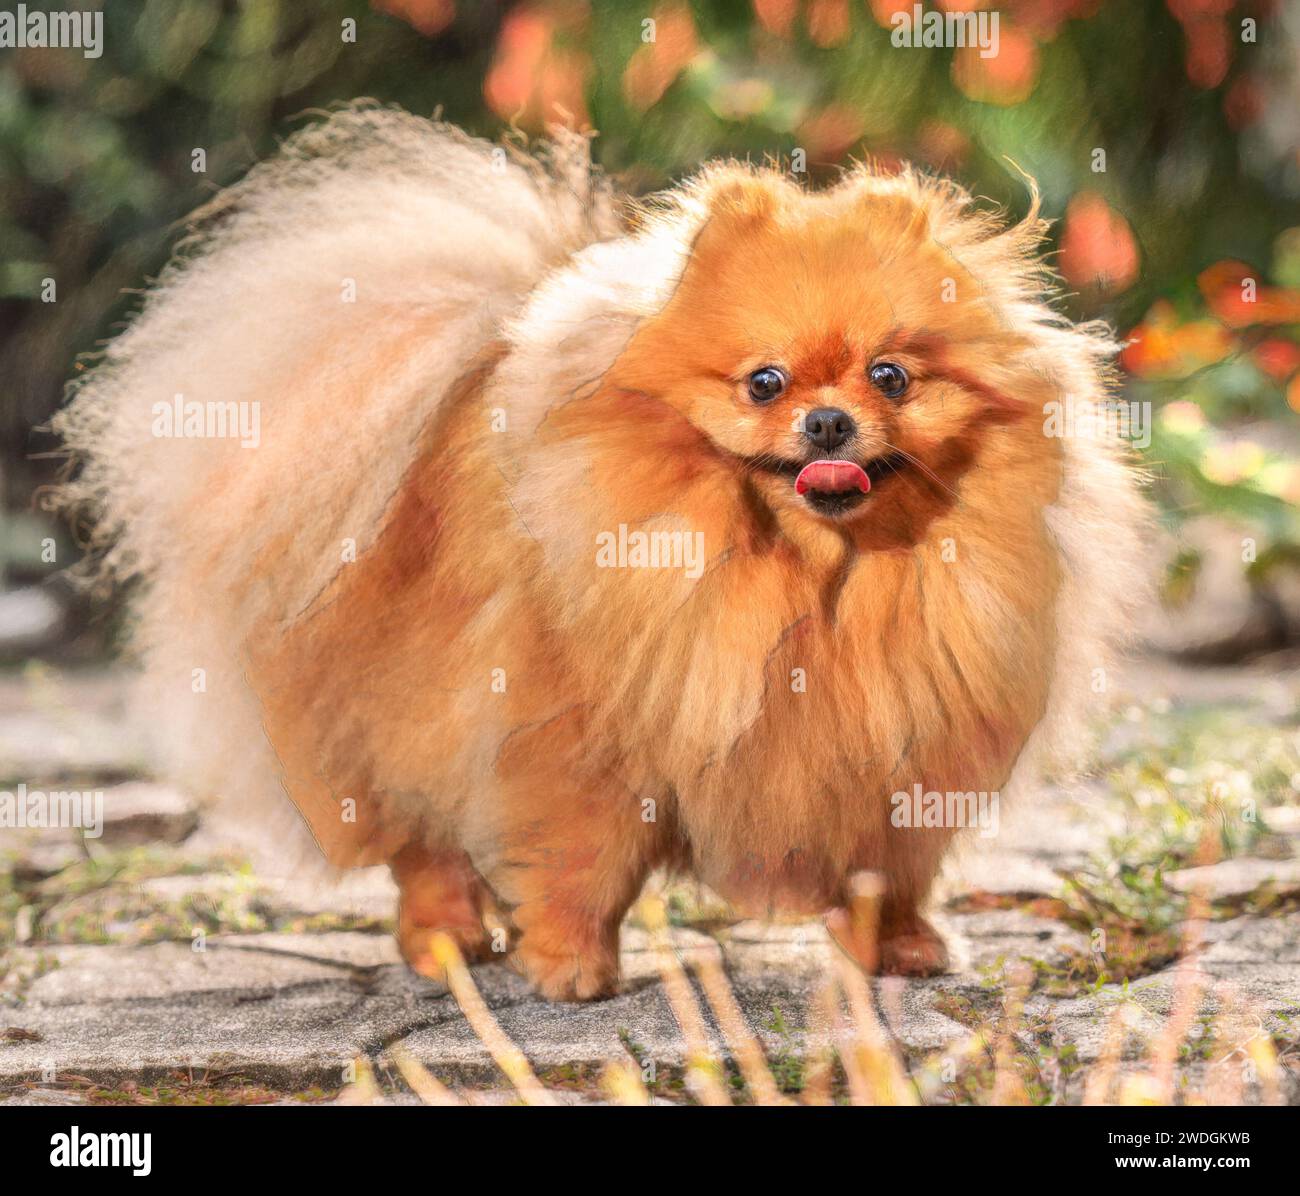 Pomeranian dog pet Stock Photo